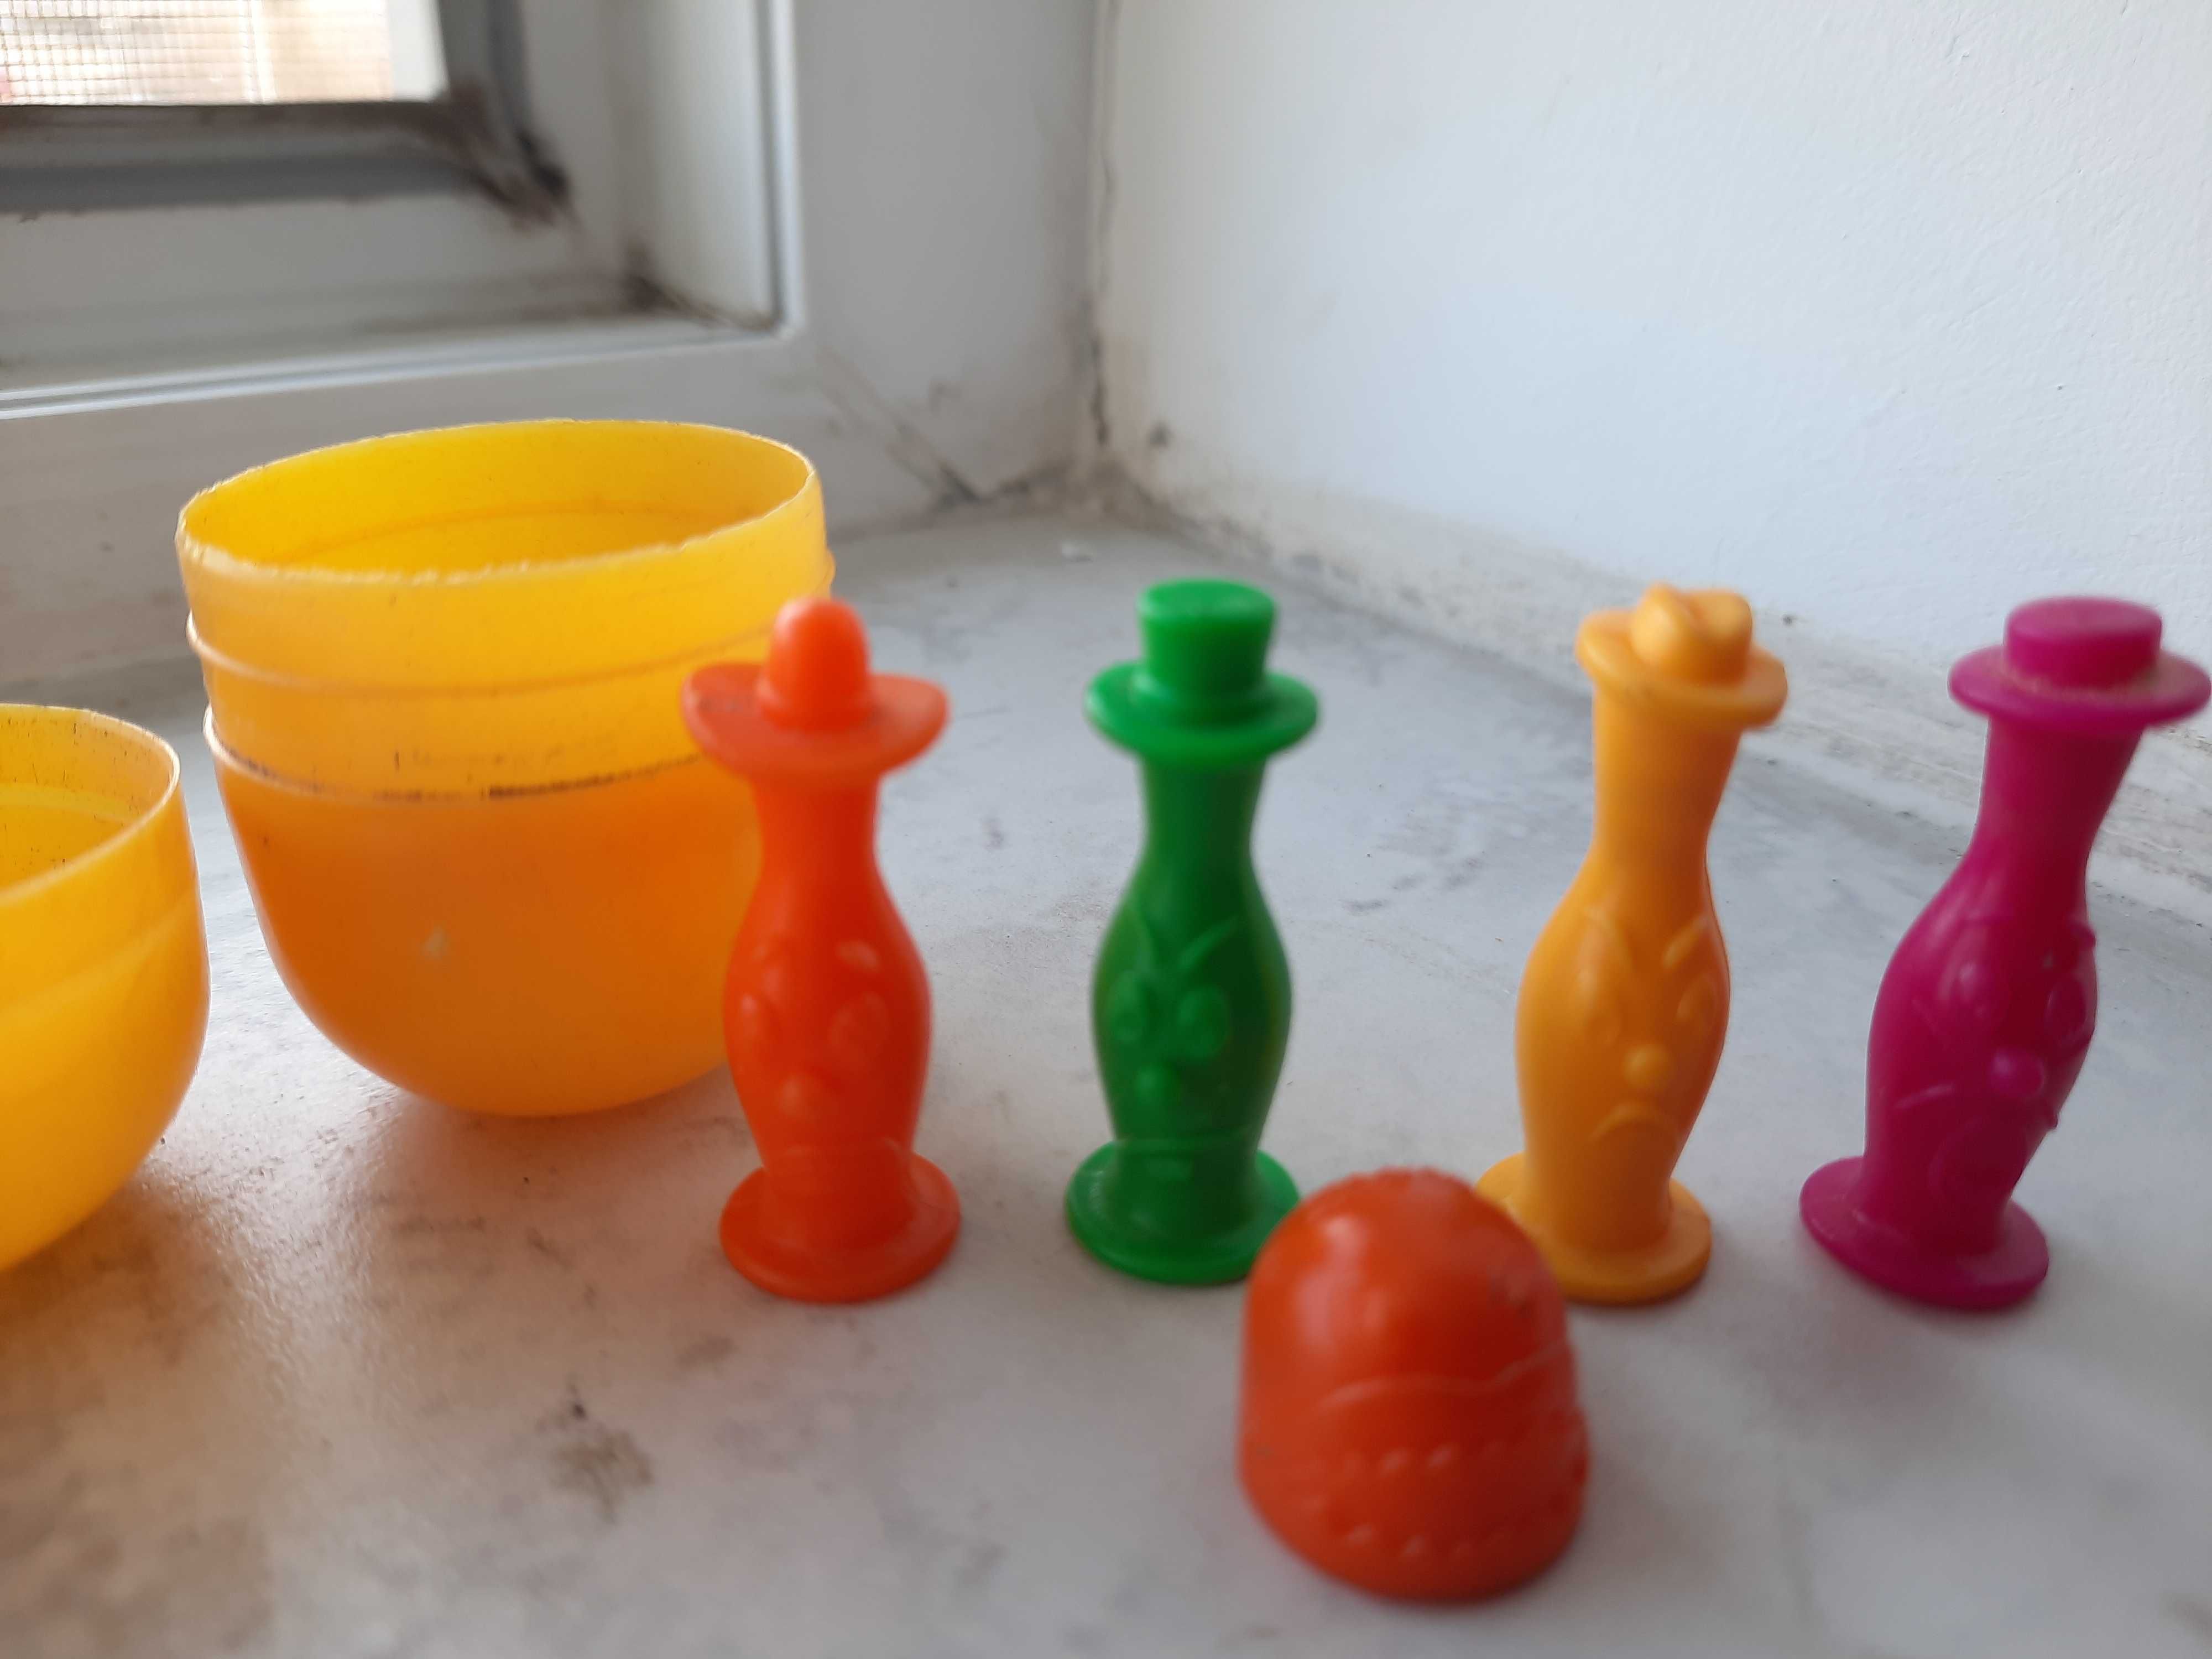 Jucarie_Jucarii_Joc copii set 4 Mini popice+bila_oua Kinder_anii 1990